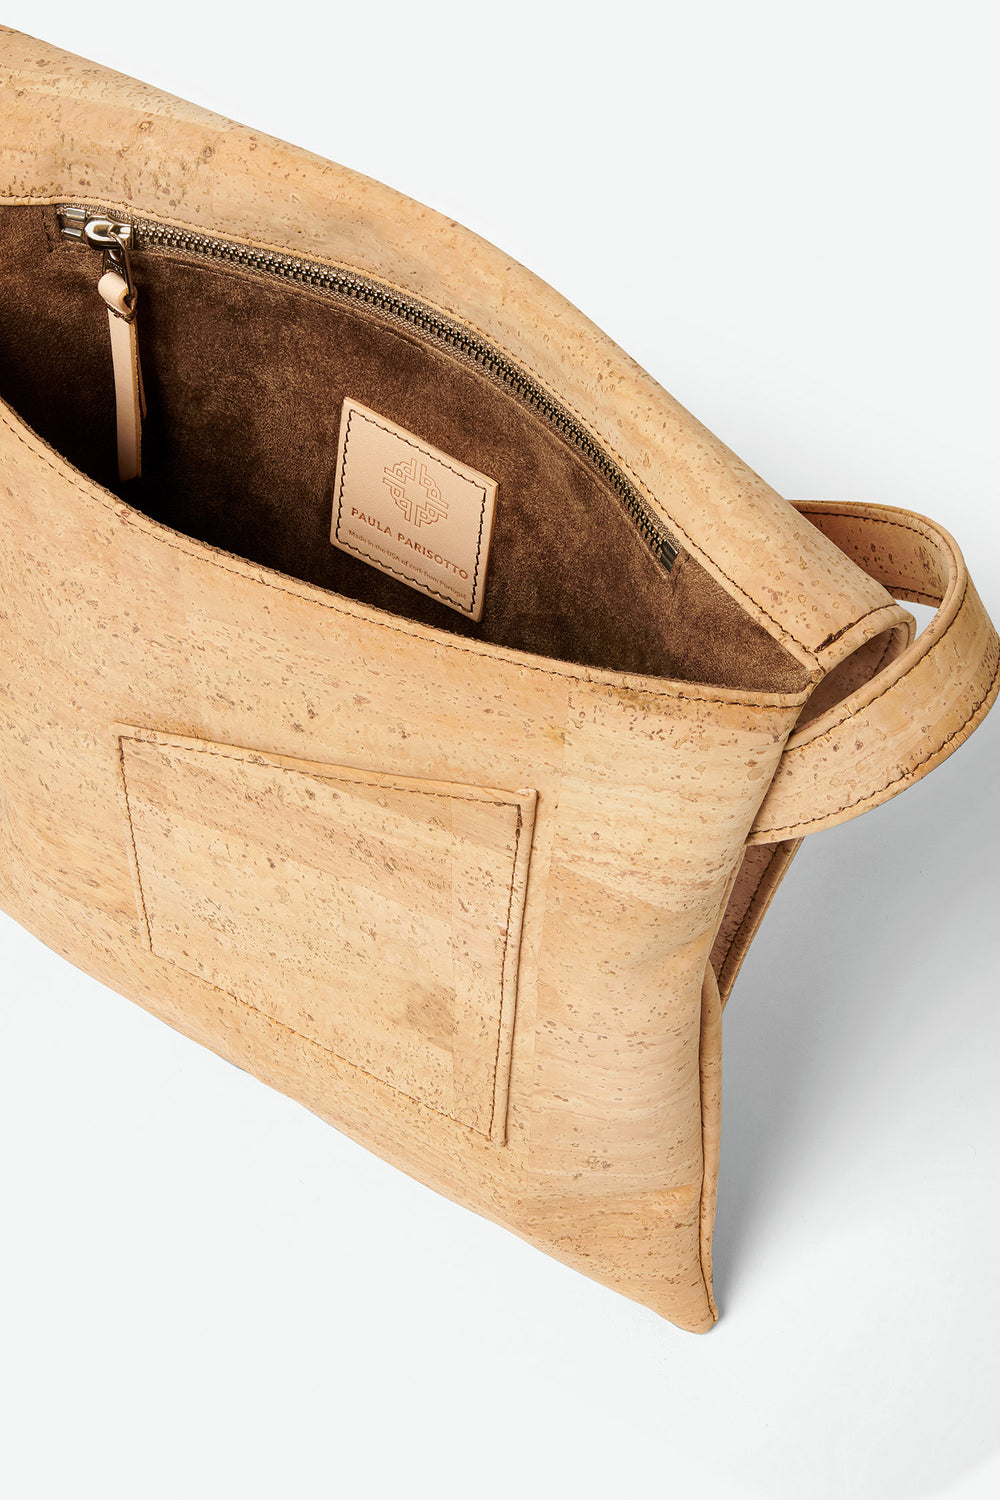 Eco-Friendly Cork Crossbody Bag | Handmade in Portugal – We Are Portugal